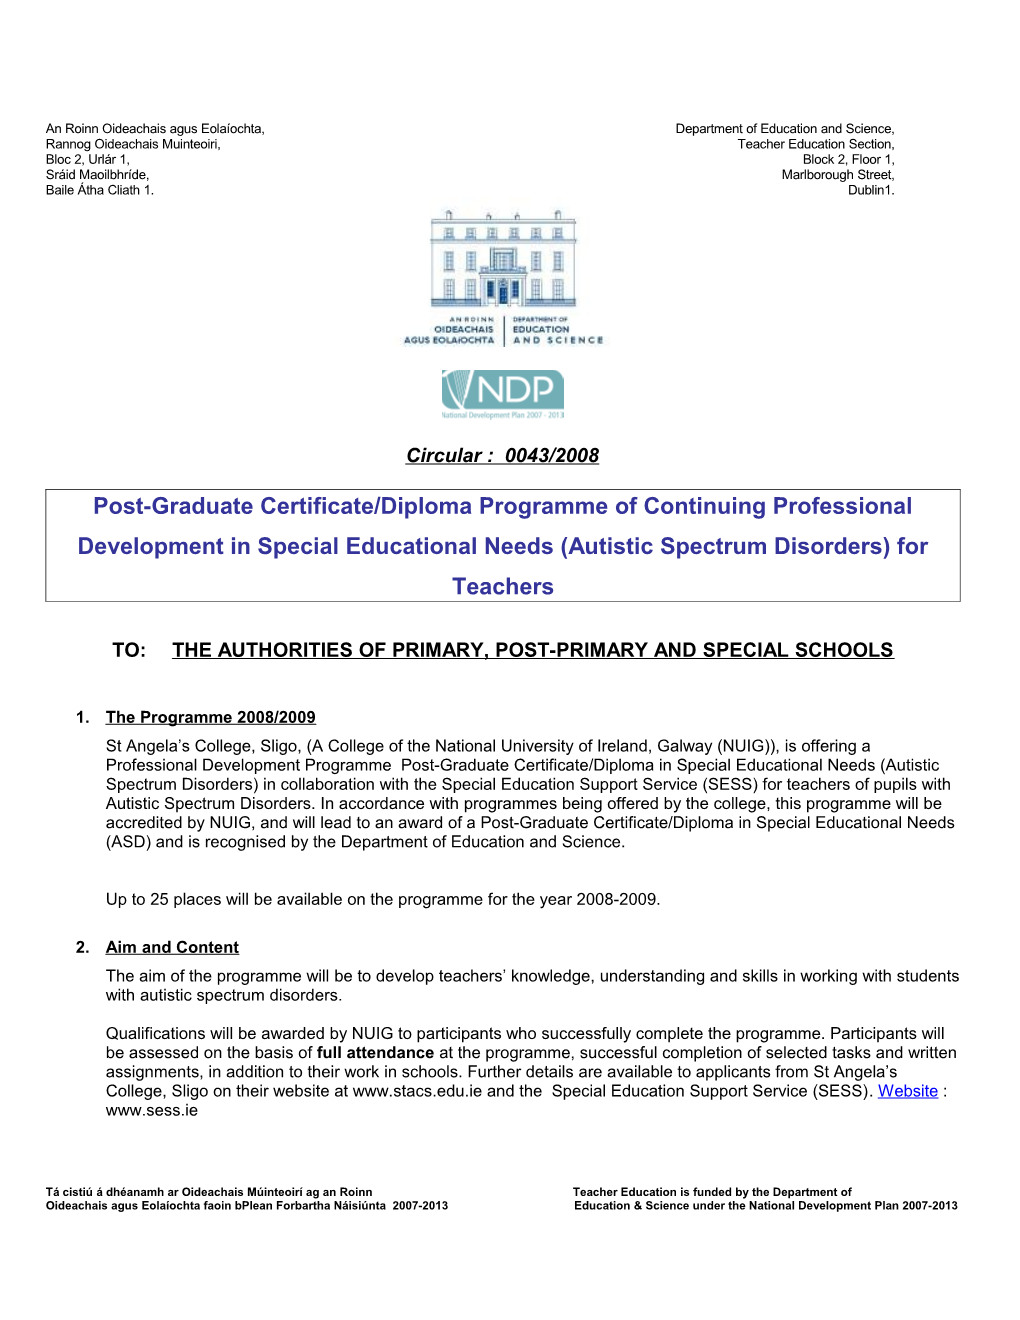 Circular 0043/2008 - Post-Graduate Certificate/Diploma Programme of Continuing Professional